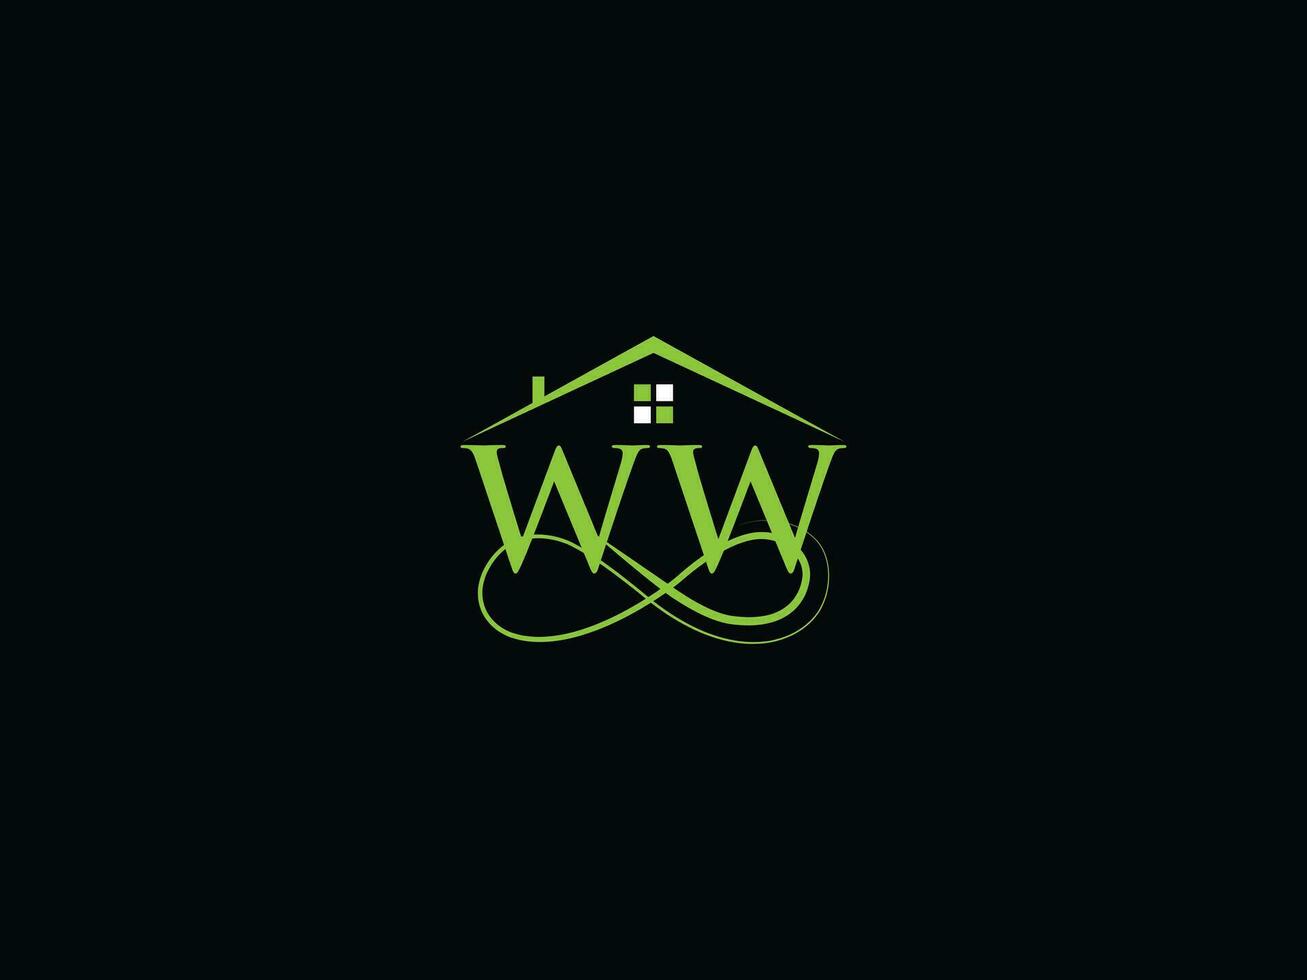 moderno ww real inmuebles logo, lujo ww logo icono vector para edificio negocio